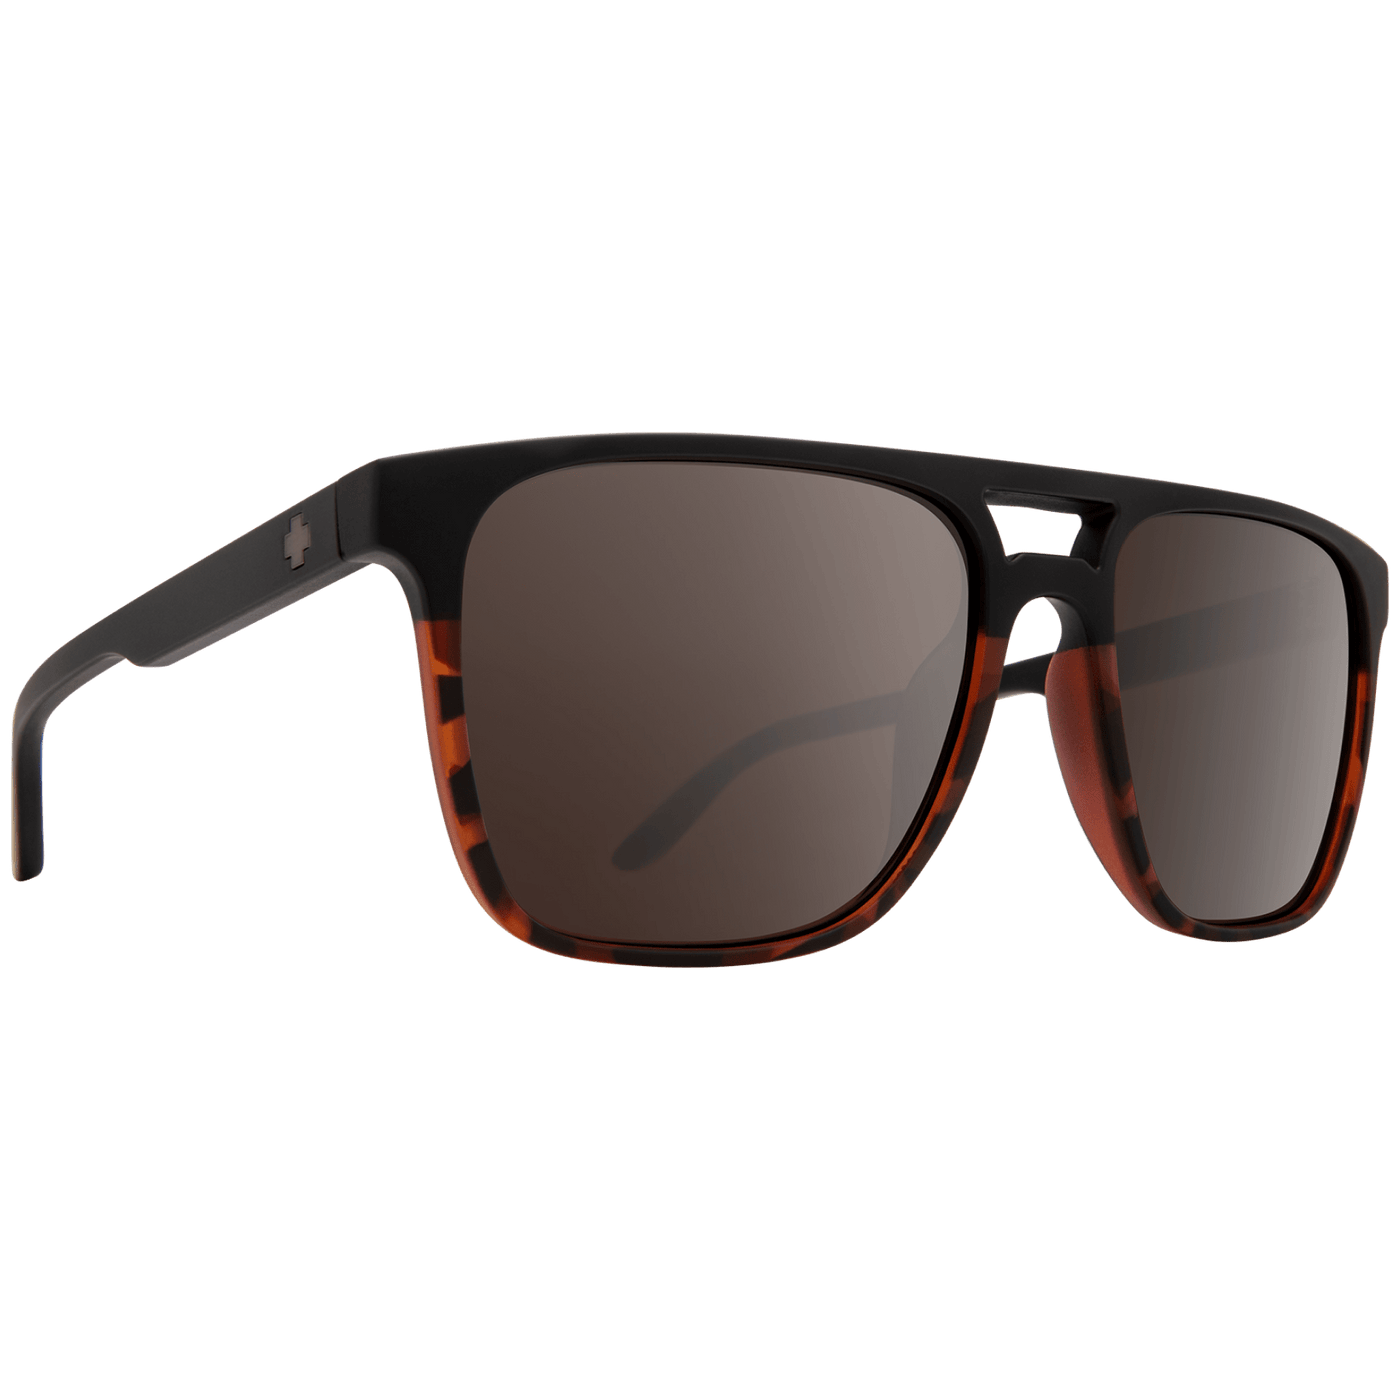 SPY CZAR Polarized Sunglasses, Happy Lens - Black